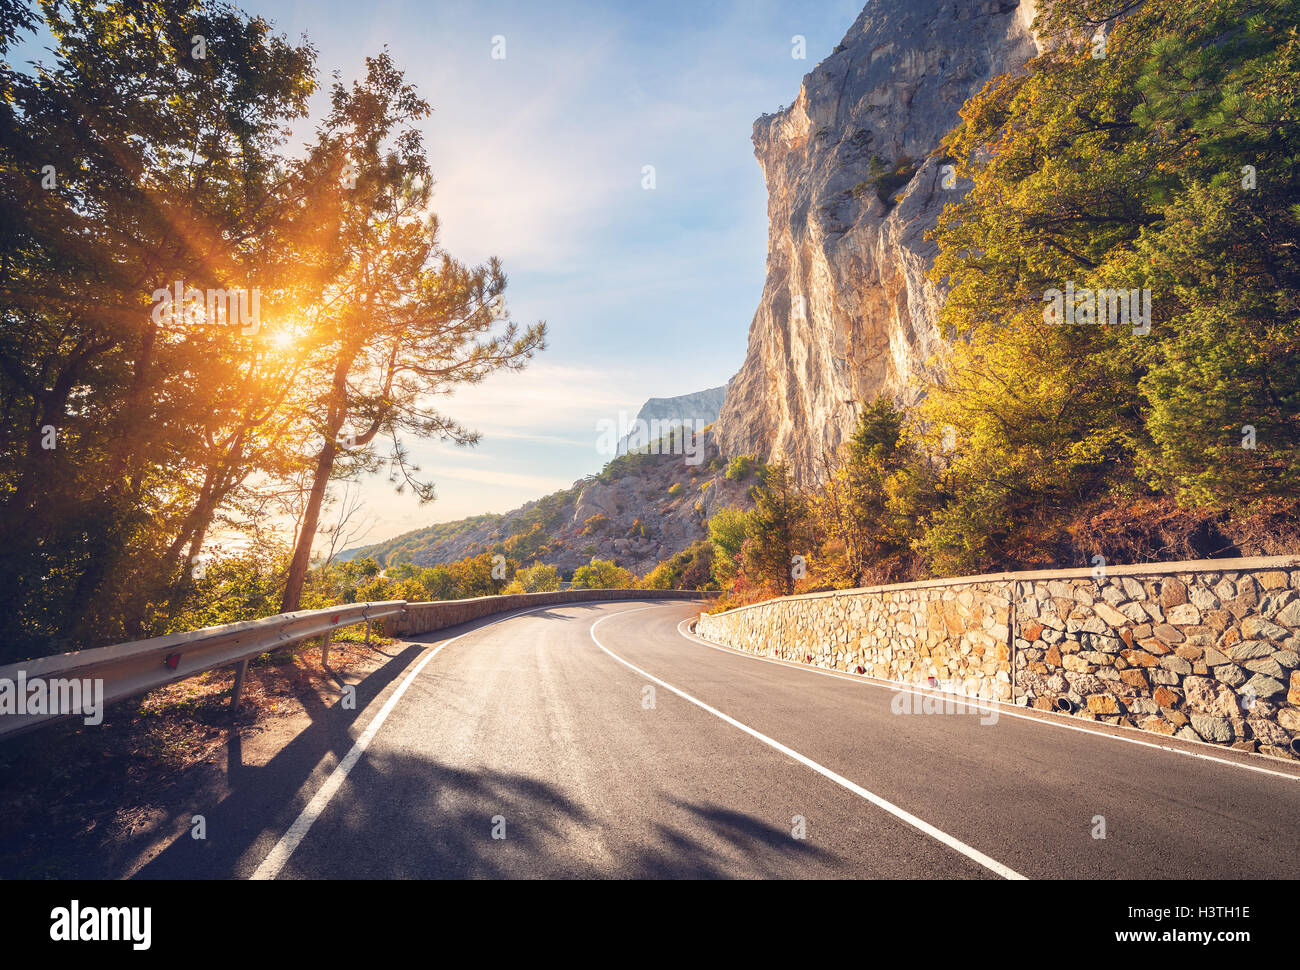 Asphaltierte Straße. Bunte Landschaft mit schönen Bergstraße mit perfekter Asphalt. Hohe Felsen, Bäume, blauer Himmel bei Sonnenaufgang Stockfoto